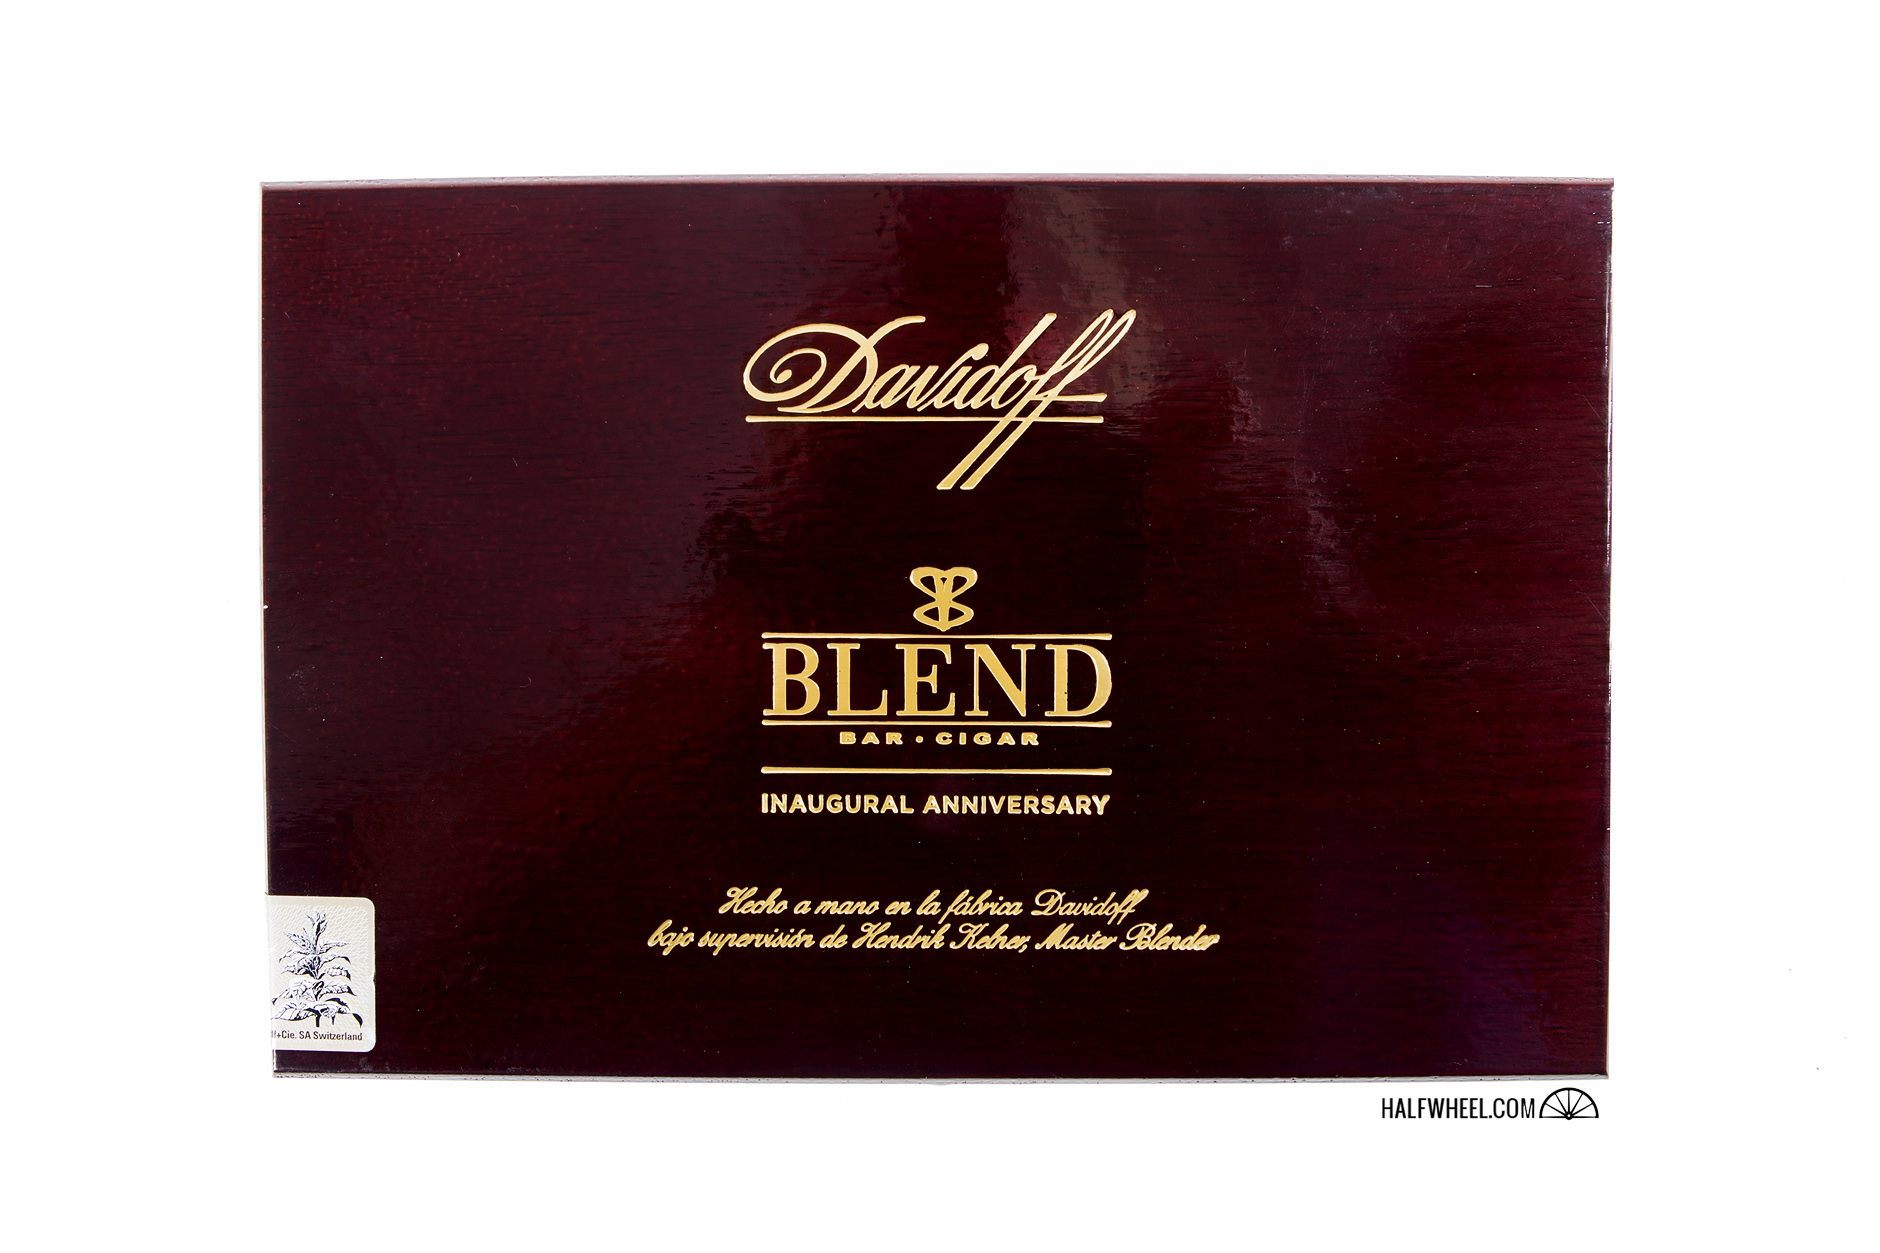 Davidoff BLEND Bar Cigar Inaugural Anniversary Box 1